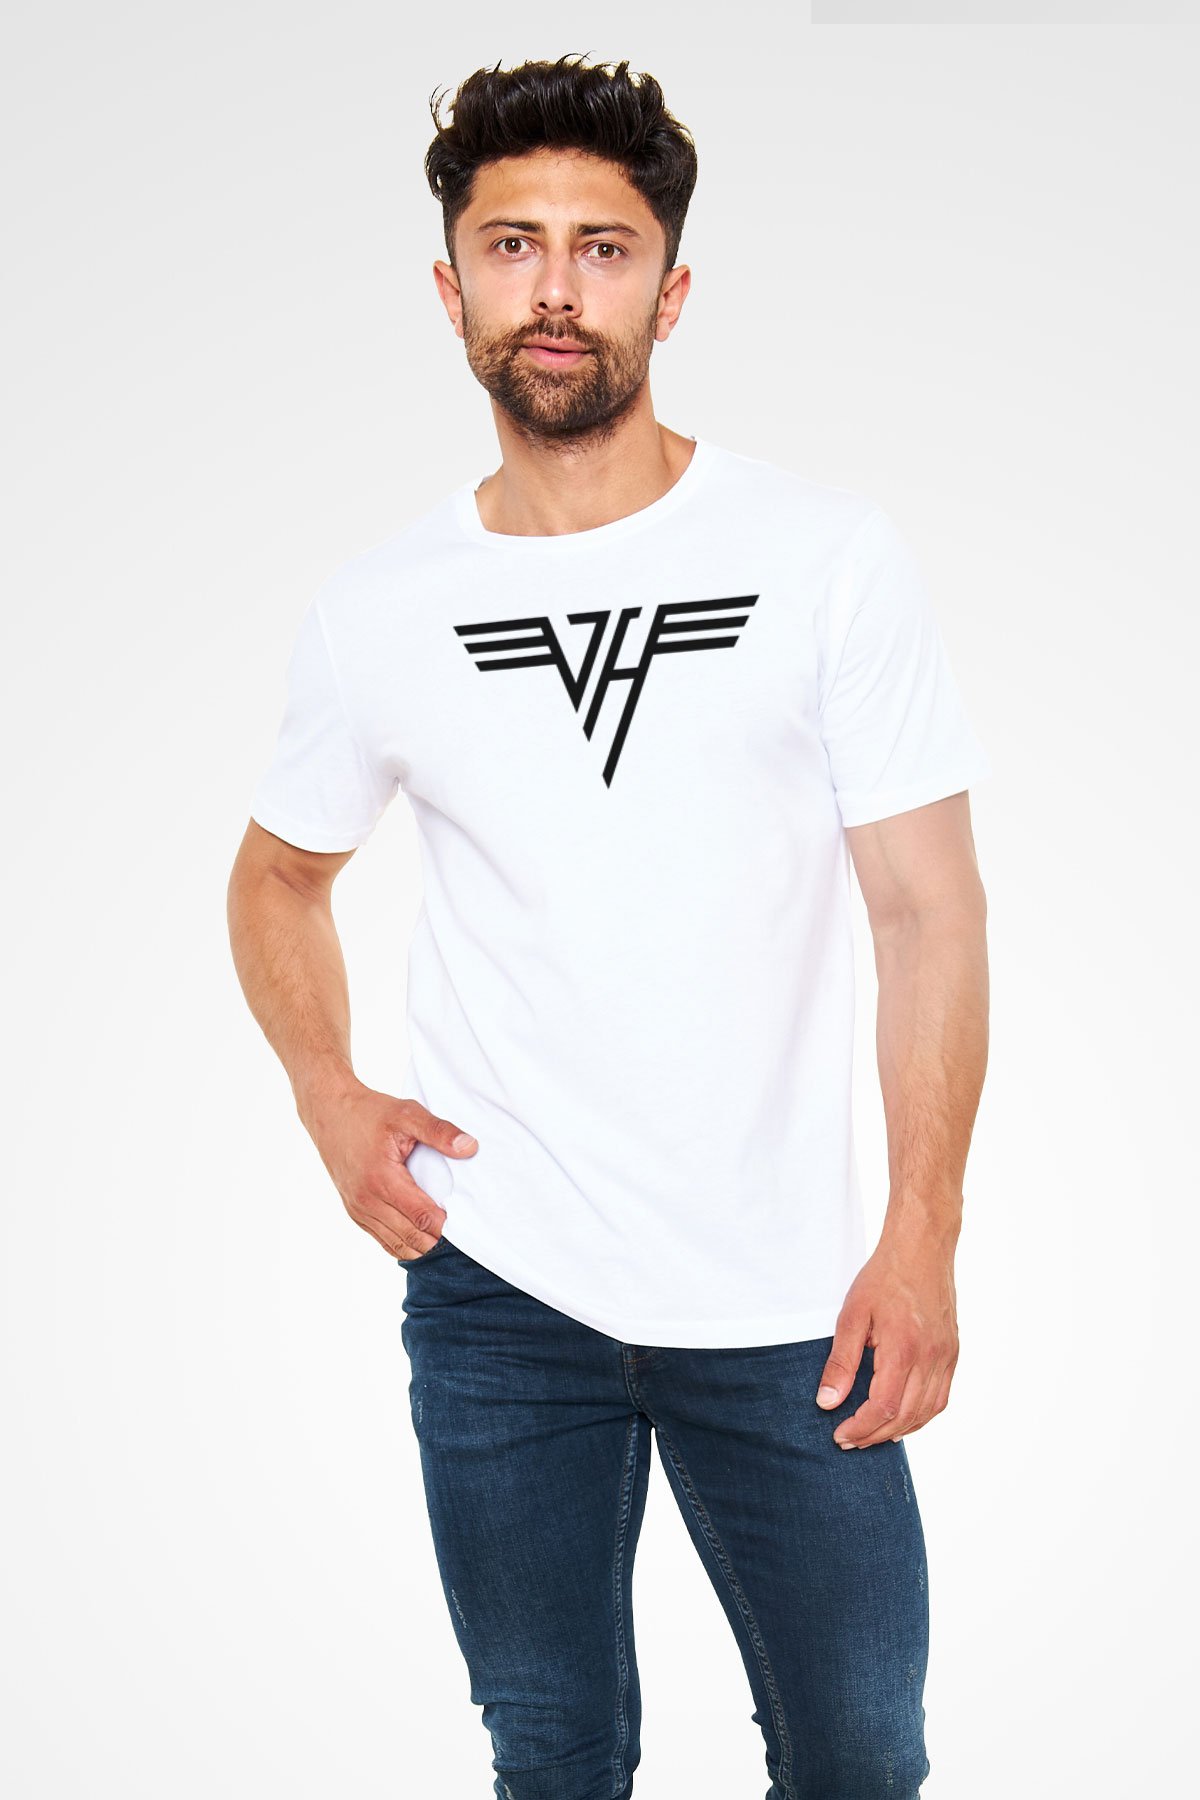 Van Halen White Unisex T-Shirt - Tees - Shirts